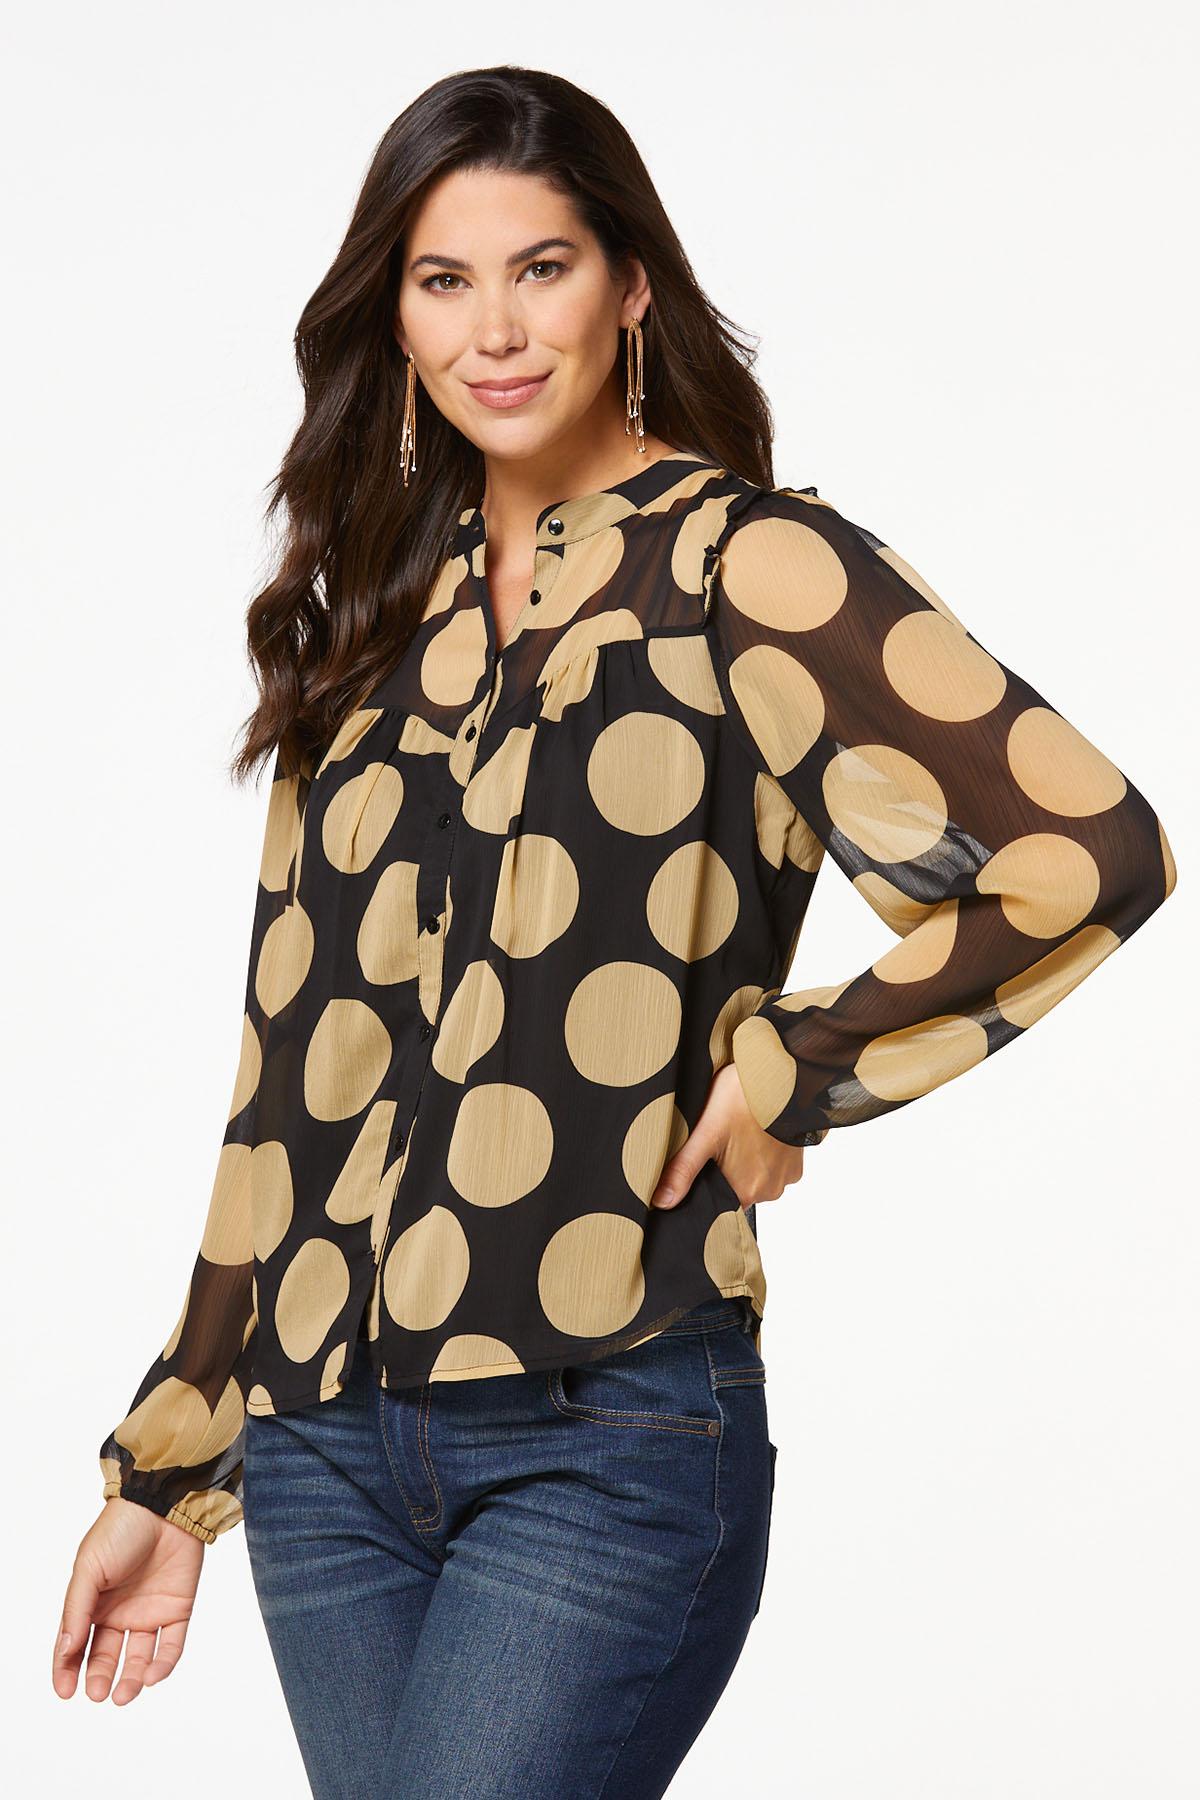 womens polka dot shirt